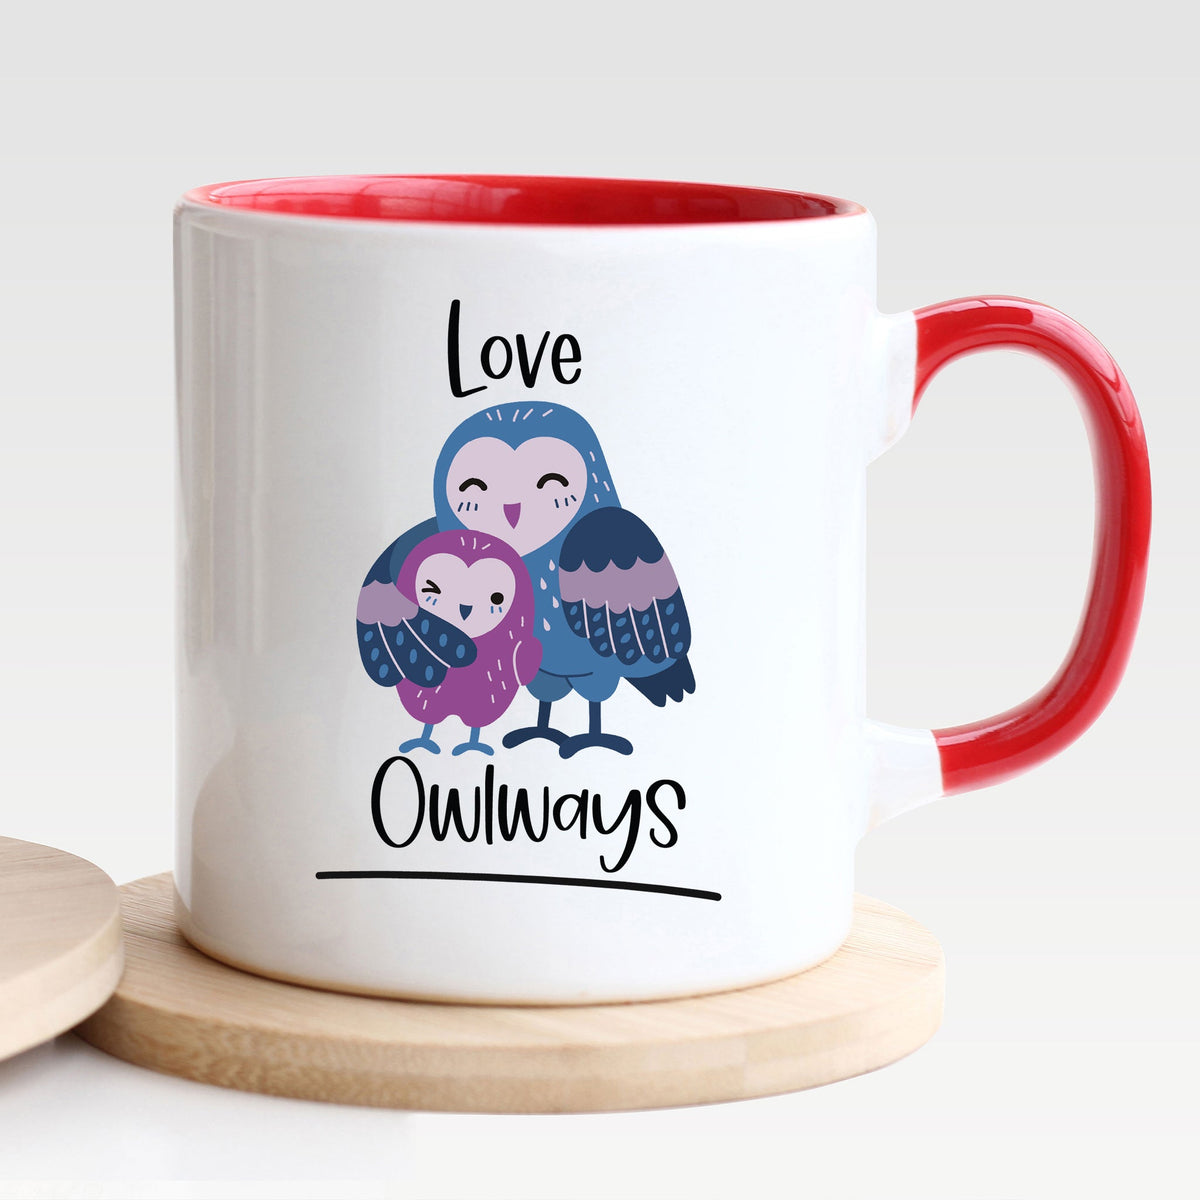 Love Owlways - Mug